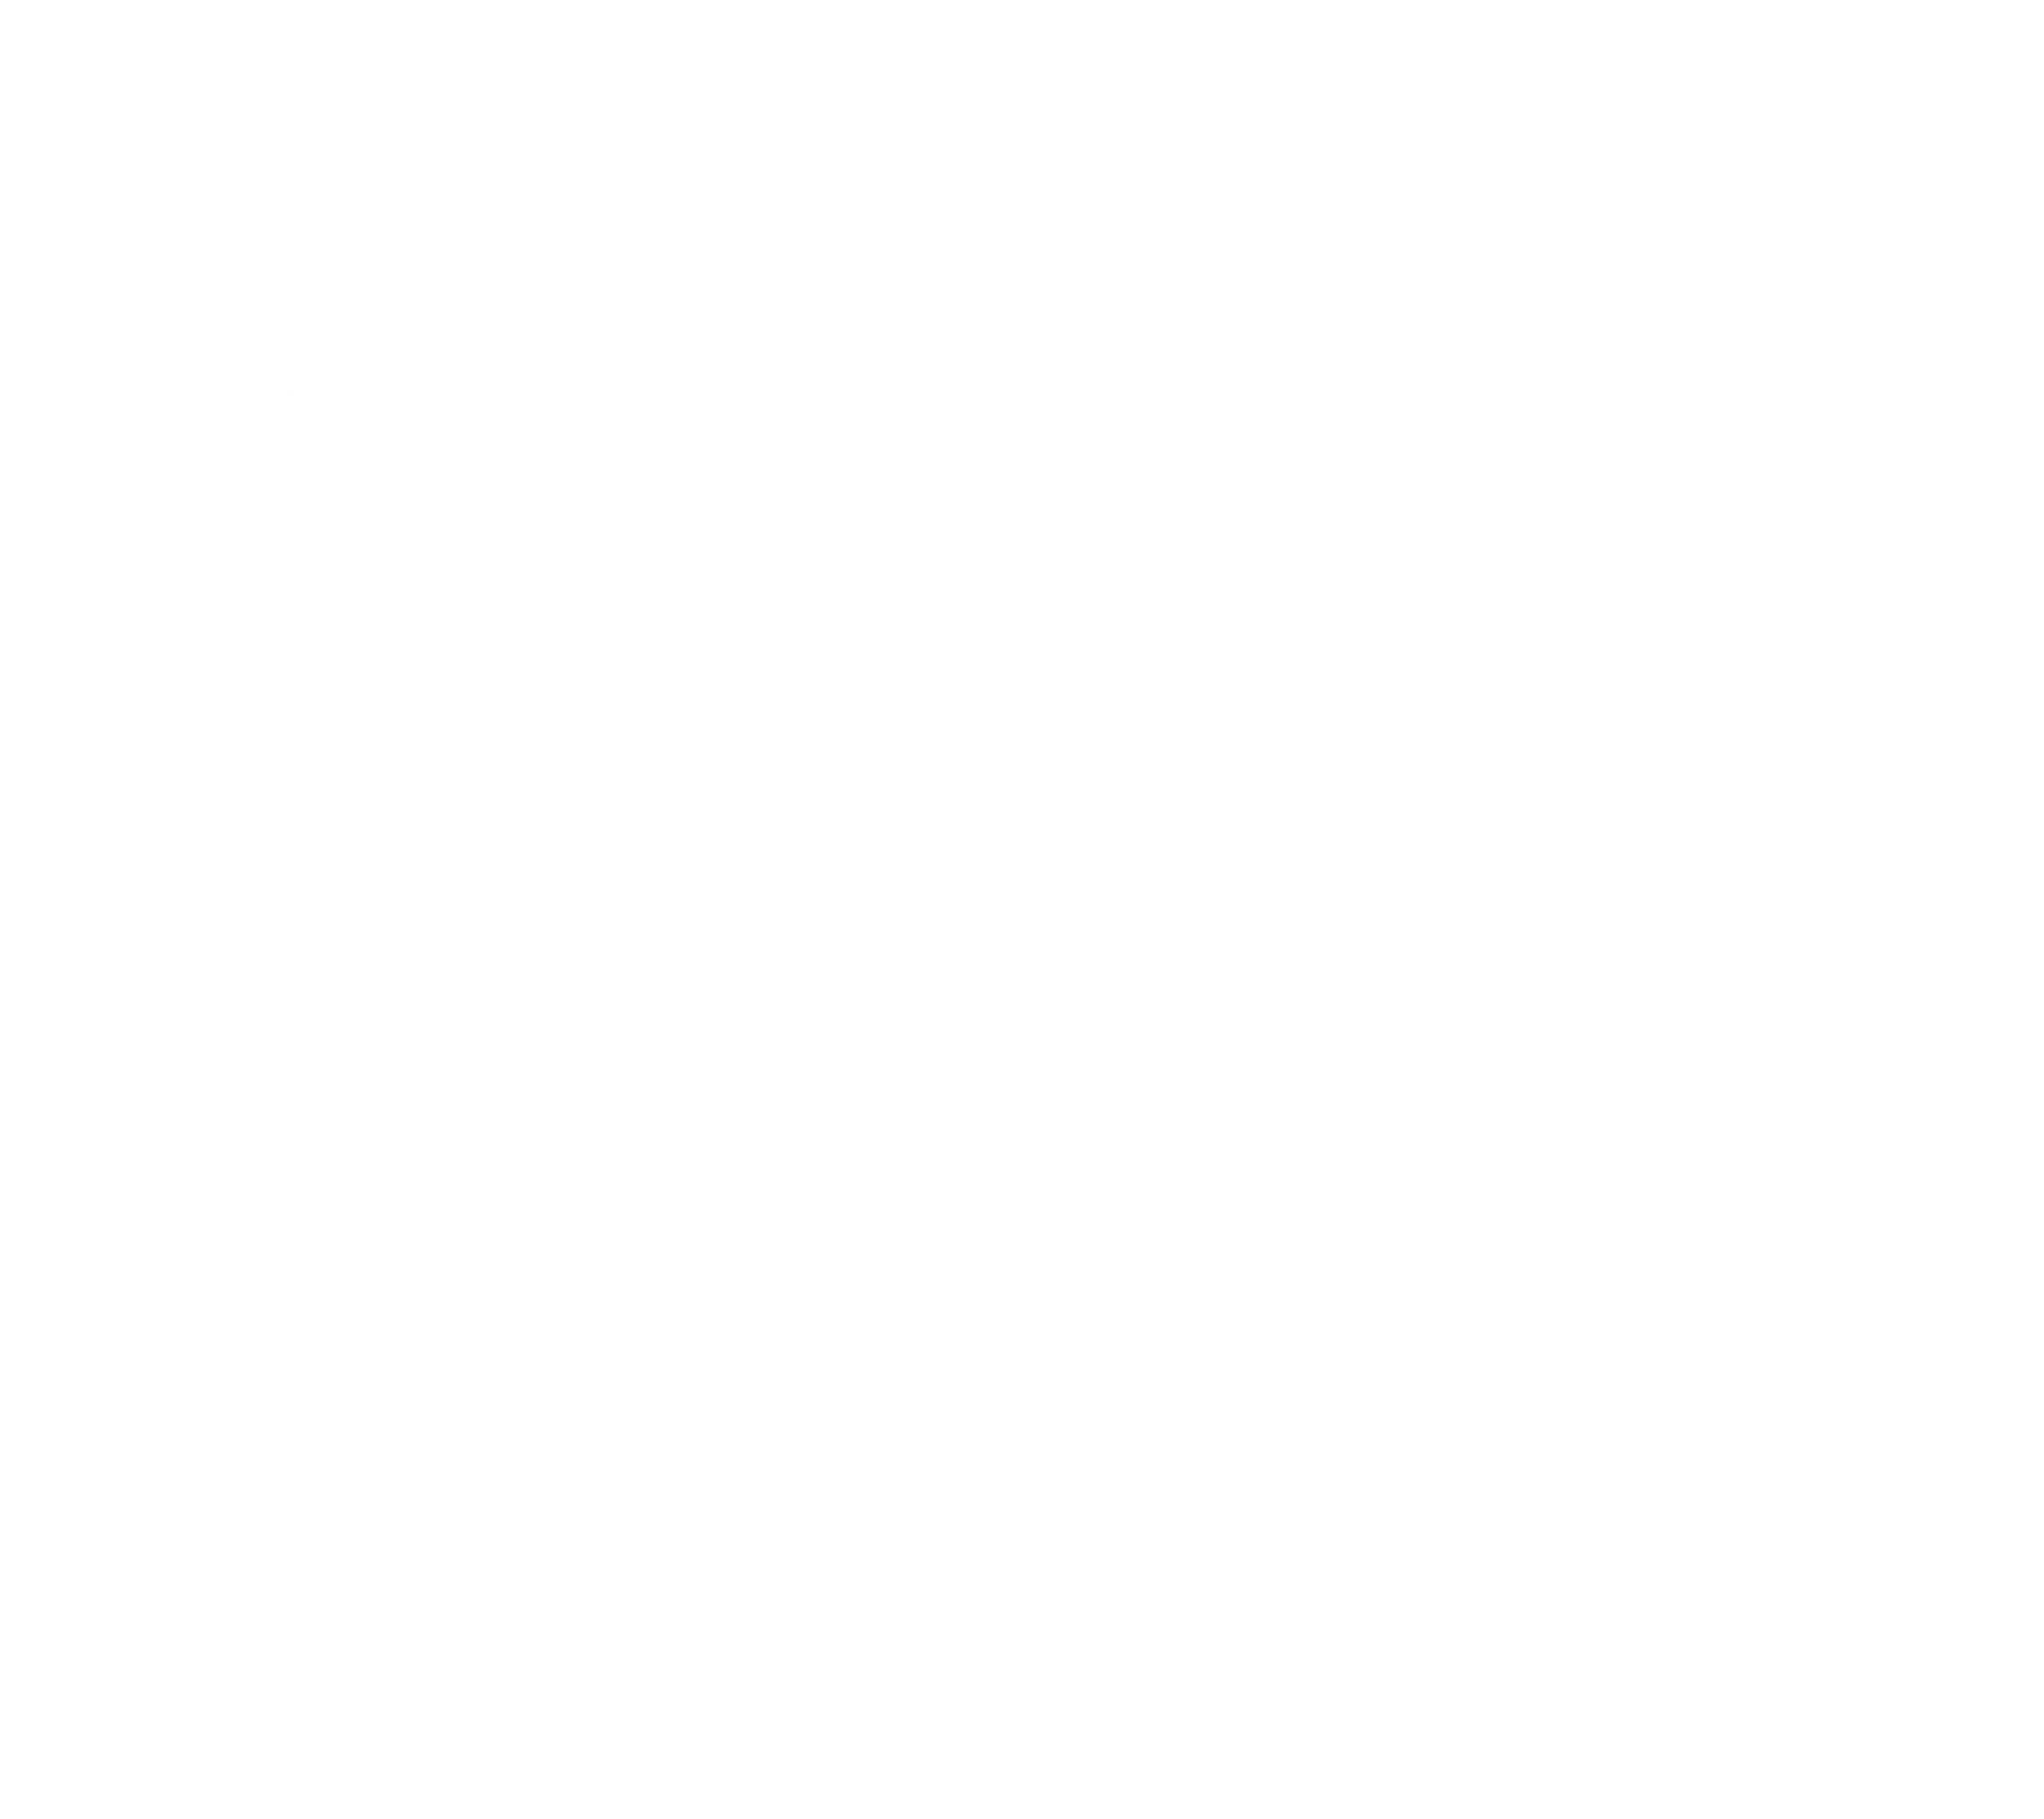 Tip Top Services NI - White